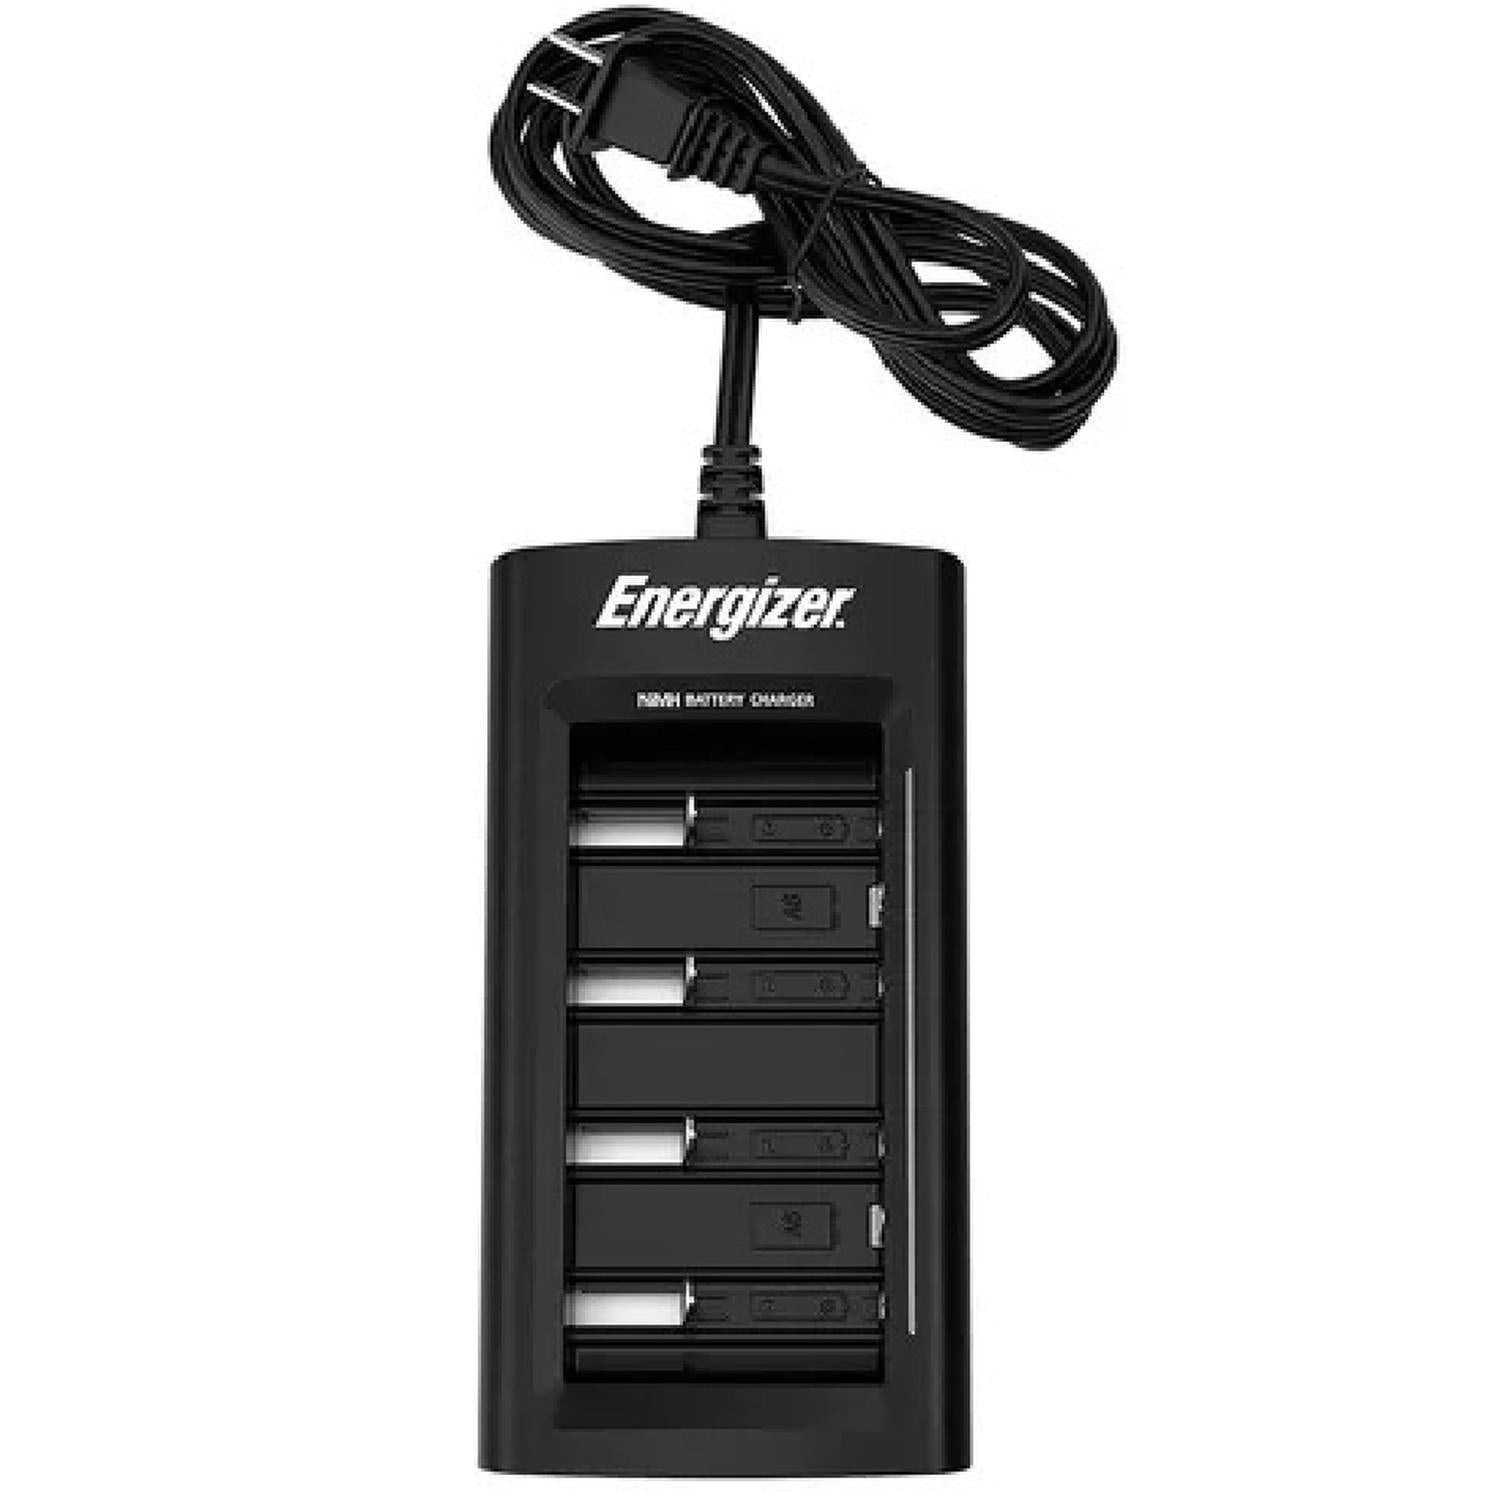 Cargador Universal Energizer x1 Und Energizer